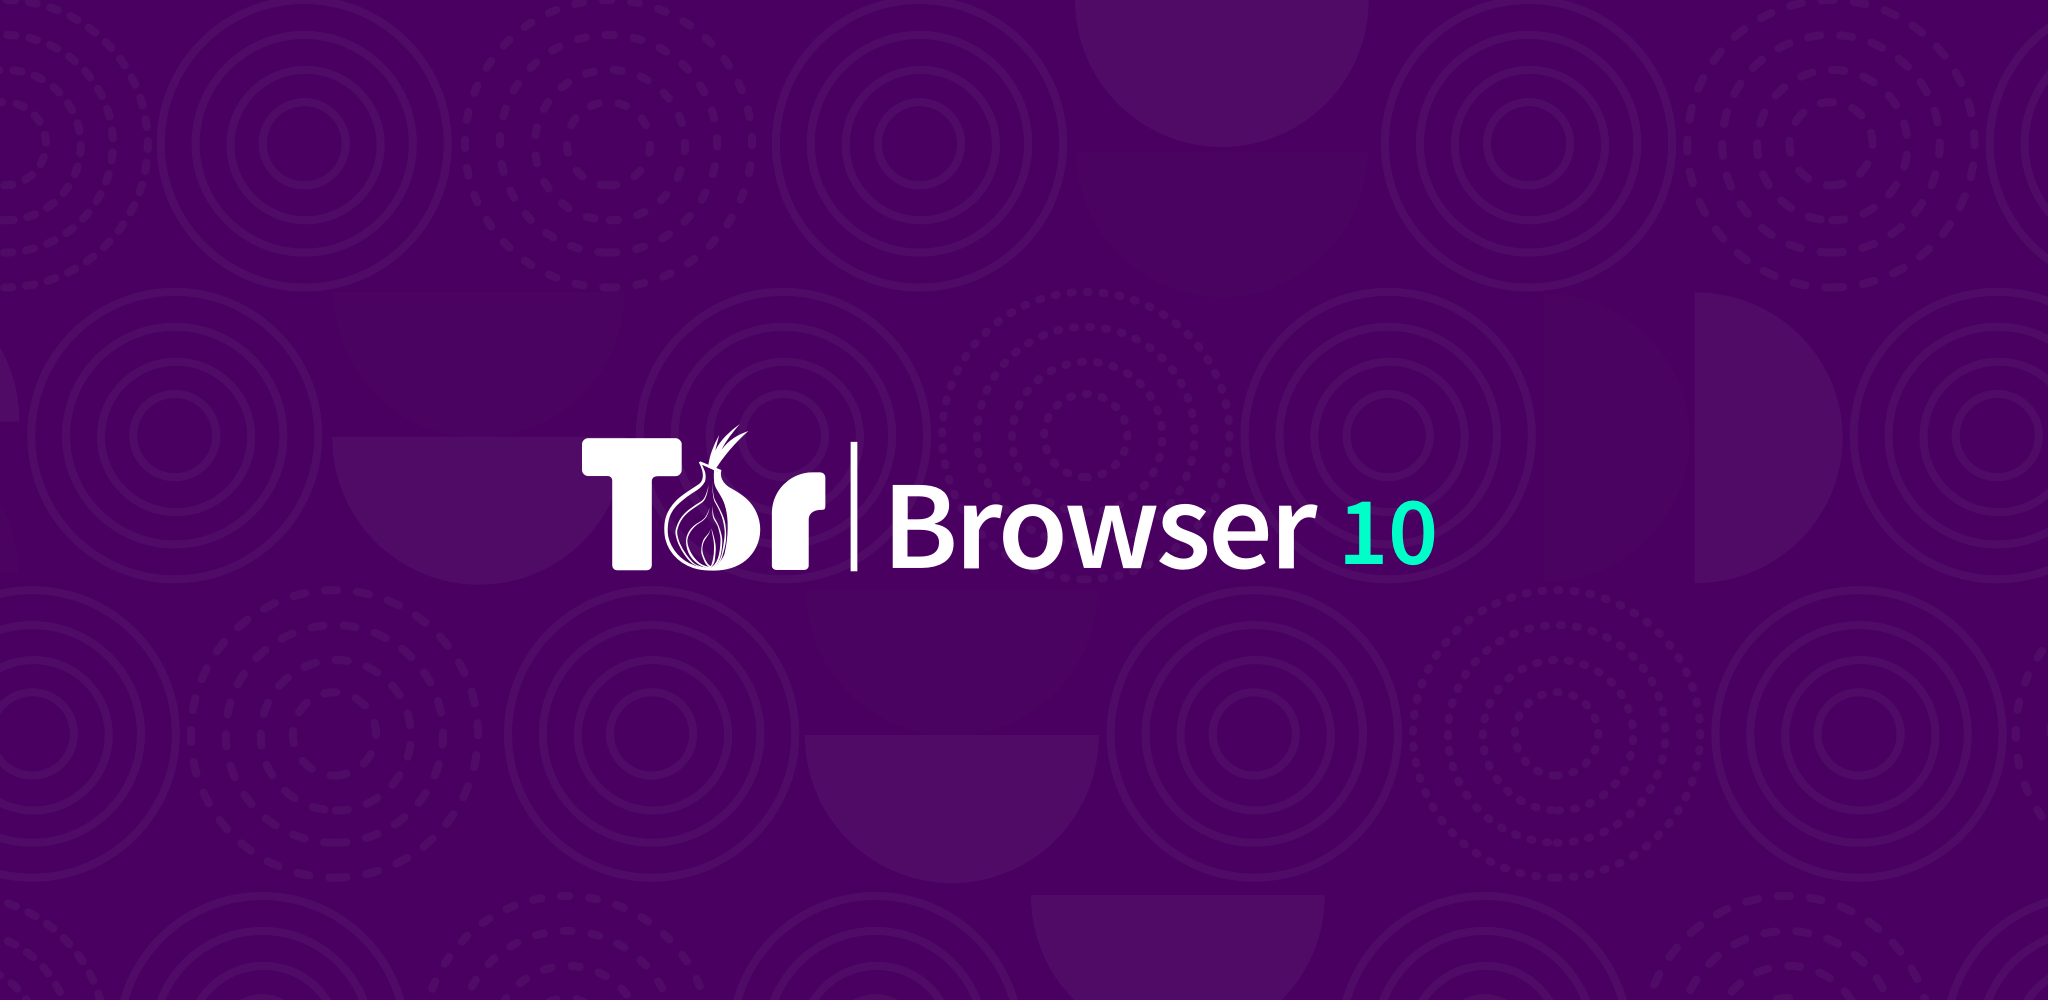 Tor browser скачать 4pda hudra закон выращивание конопли дома